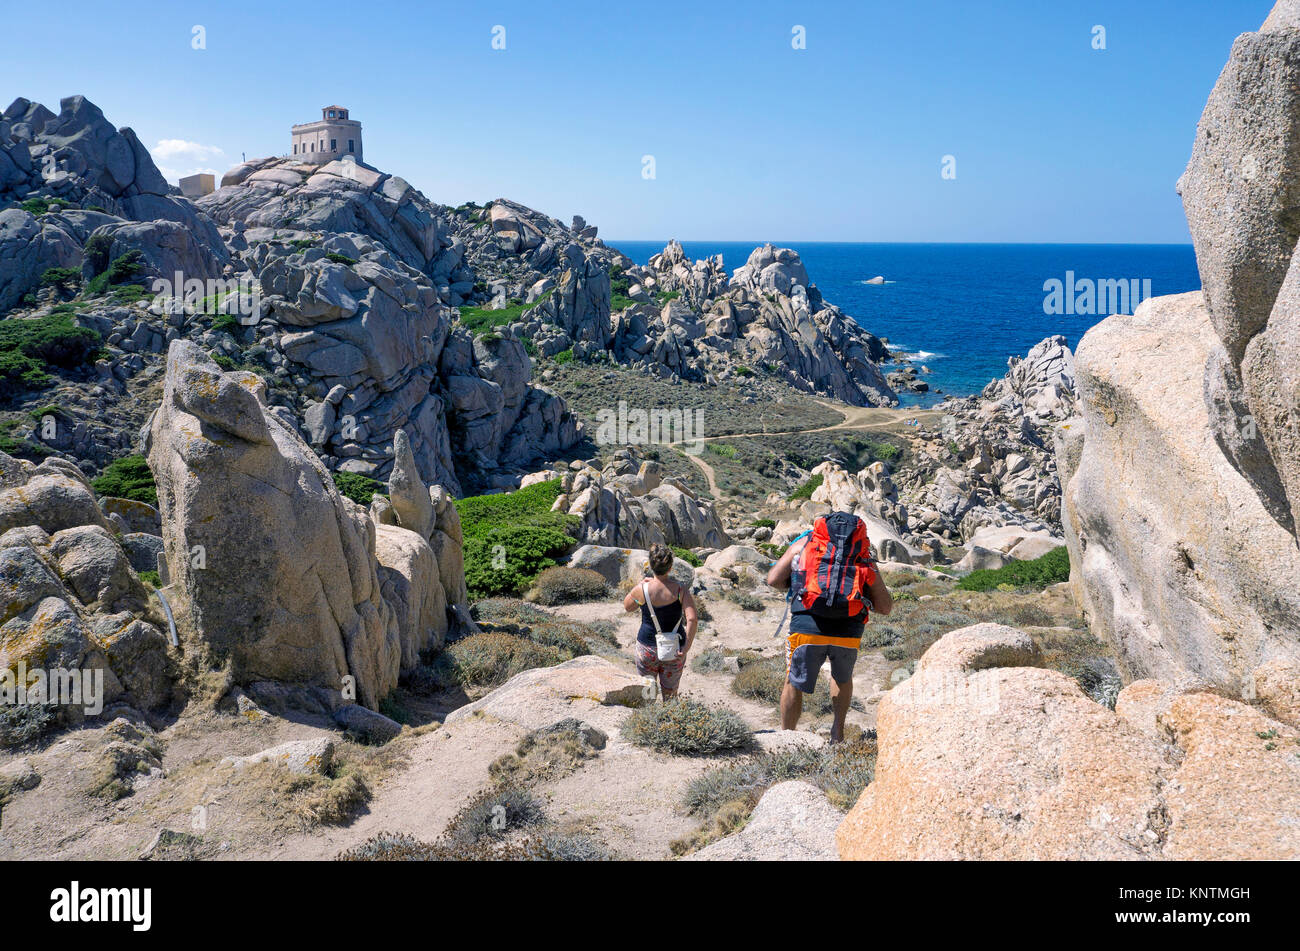 Coastal landscape, granite boulders at Capo Testa, Santa Teresa di Gallura, Sardinia, Italy, Mediterranean sea, Europe Stock Photo